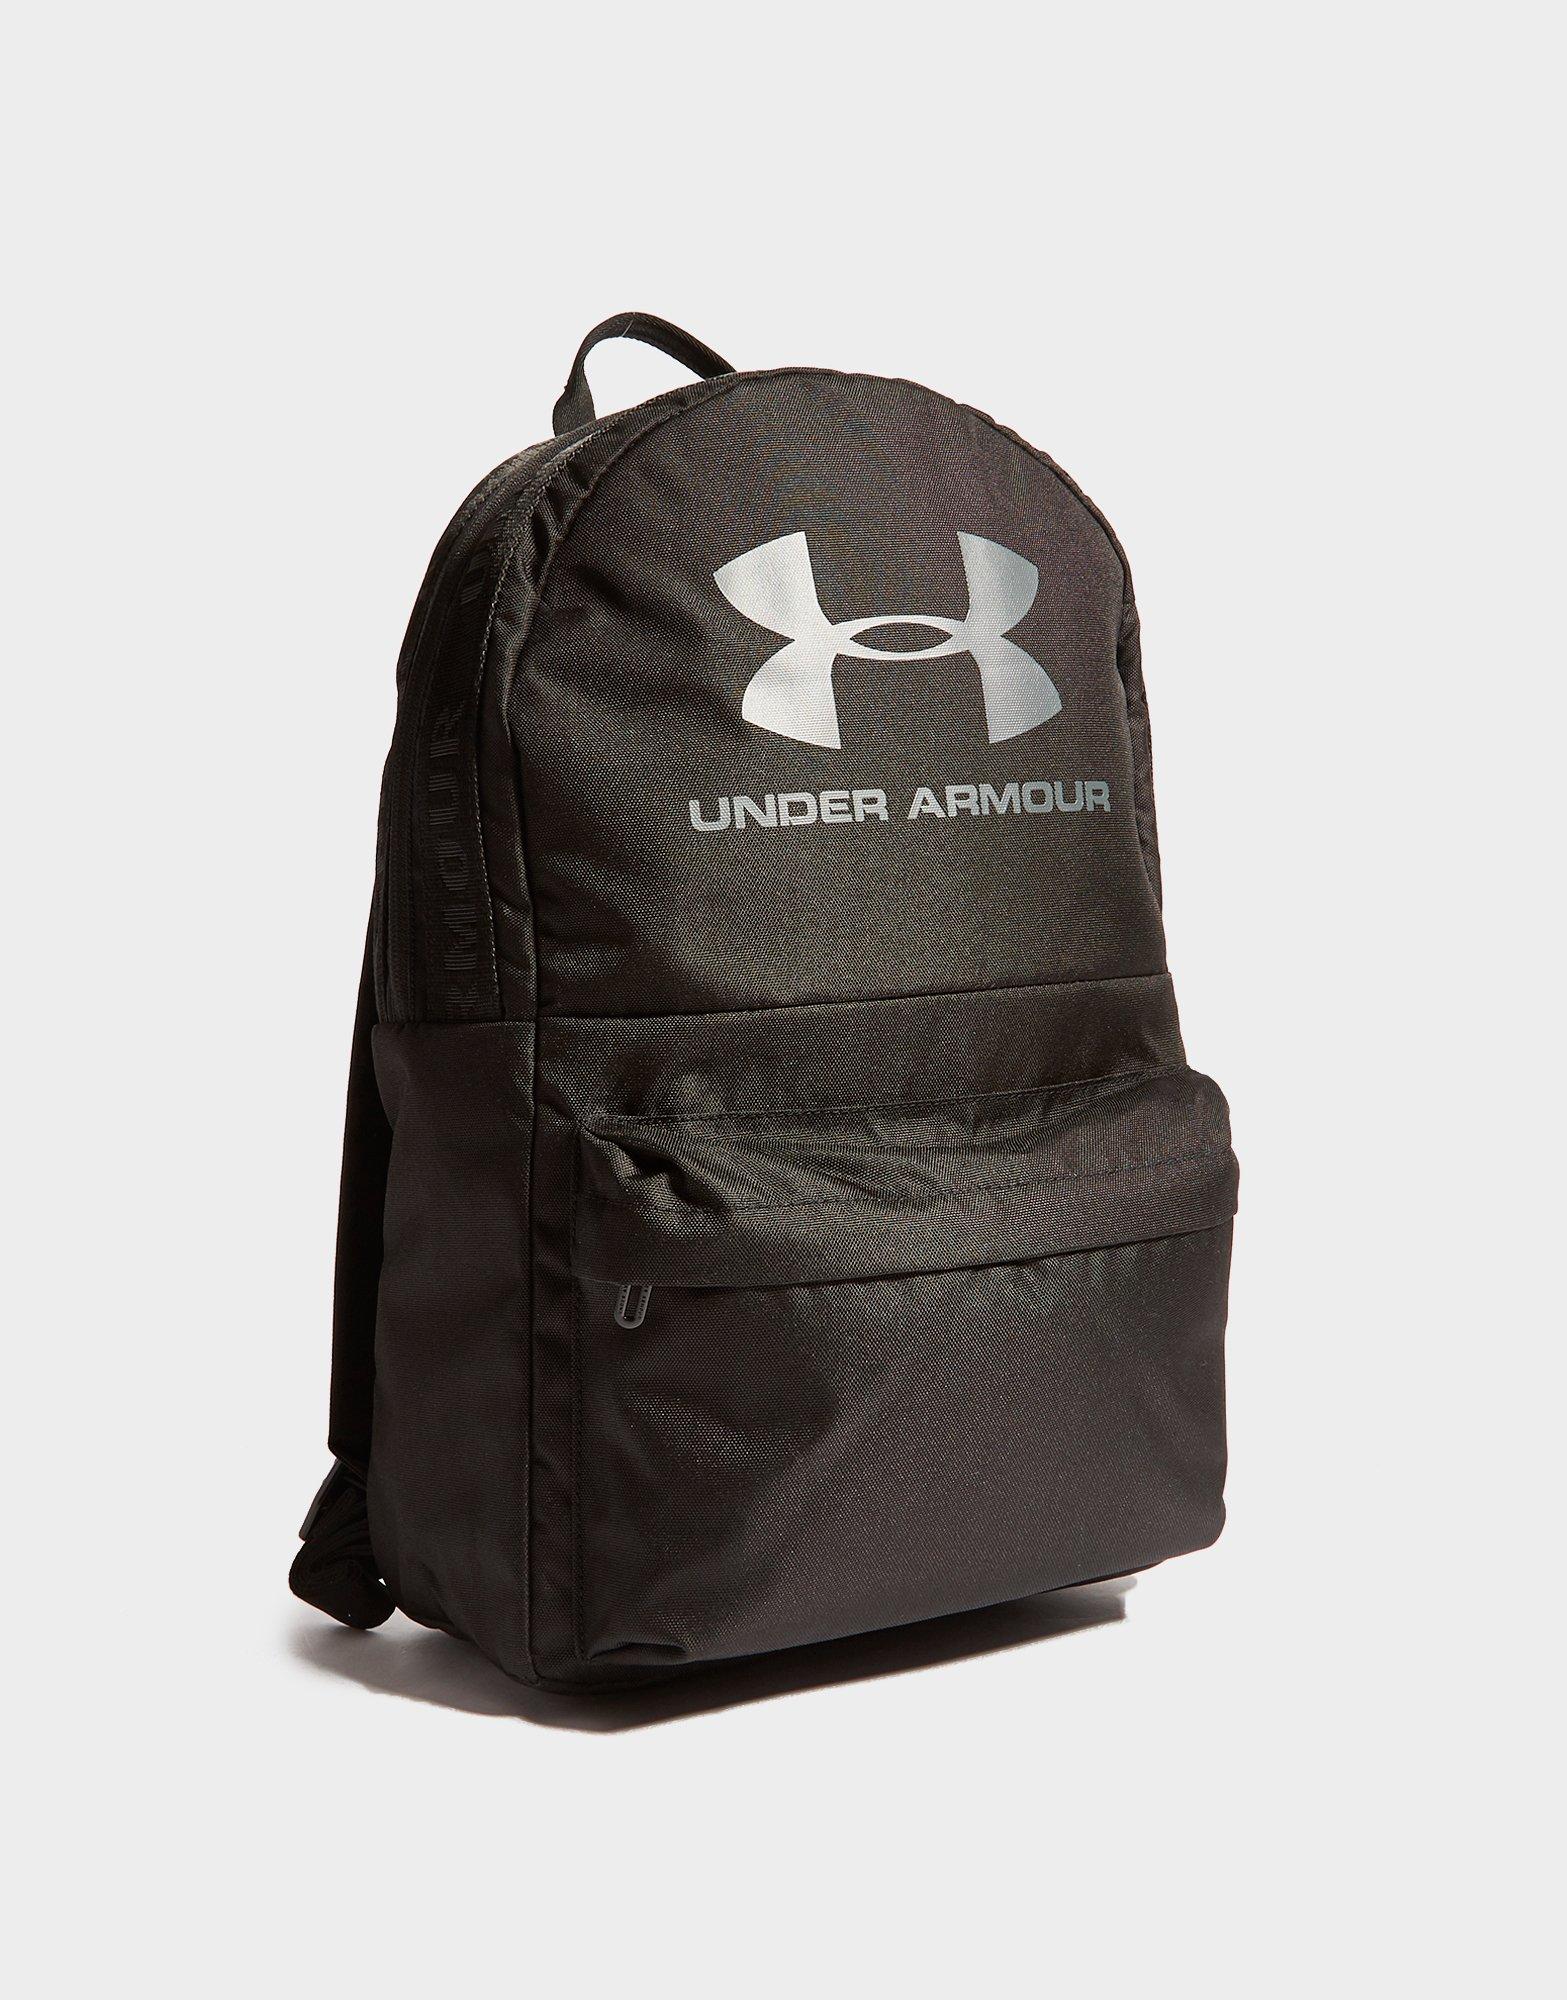 under armor laptop backpack